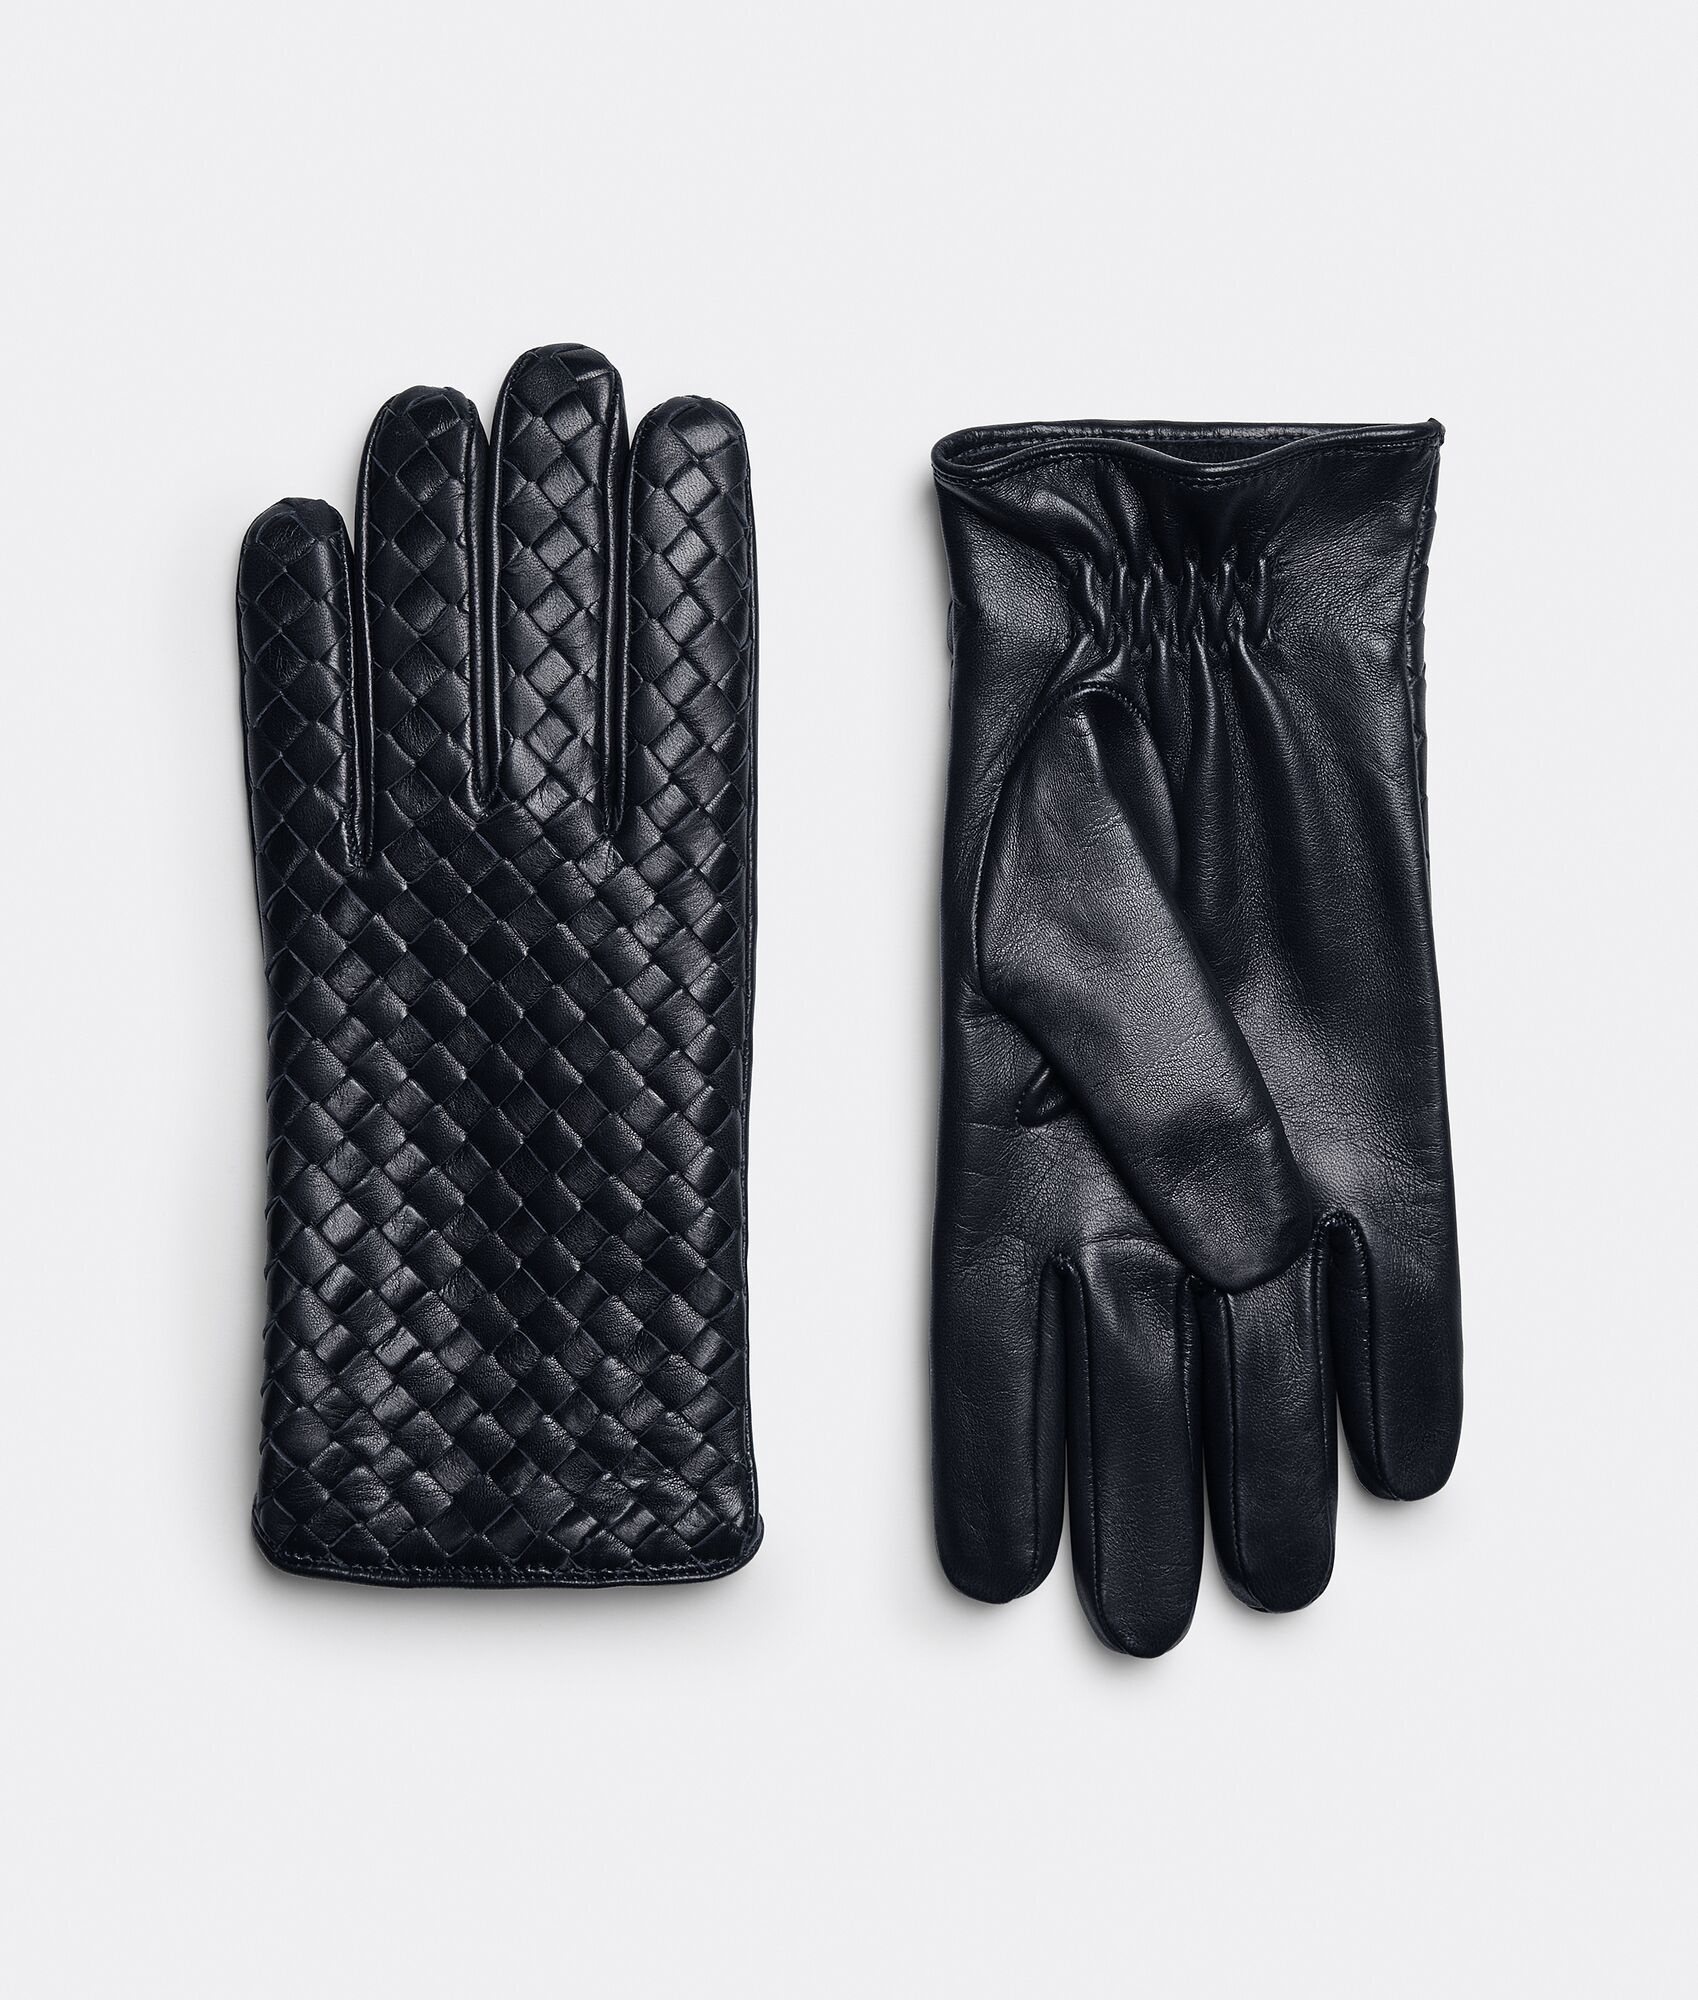 intrecciato leather gloves - 1